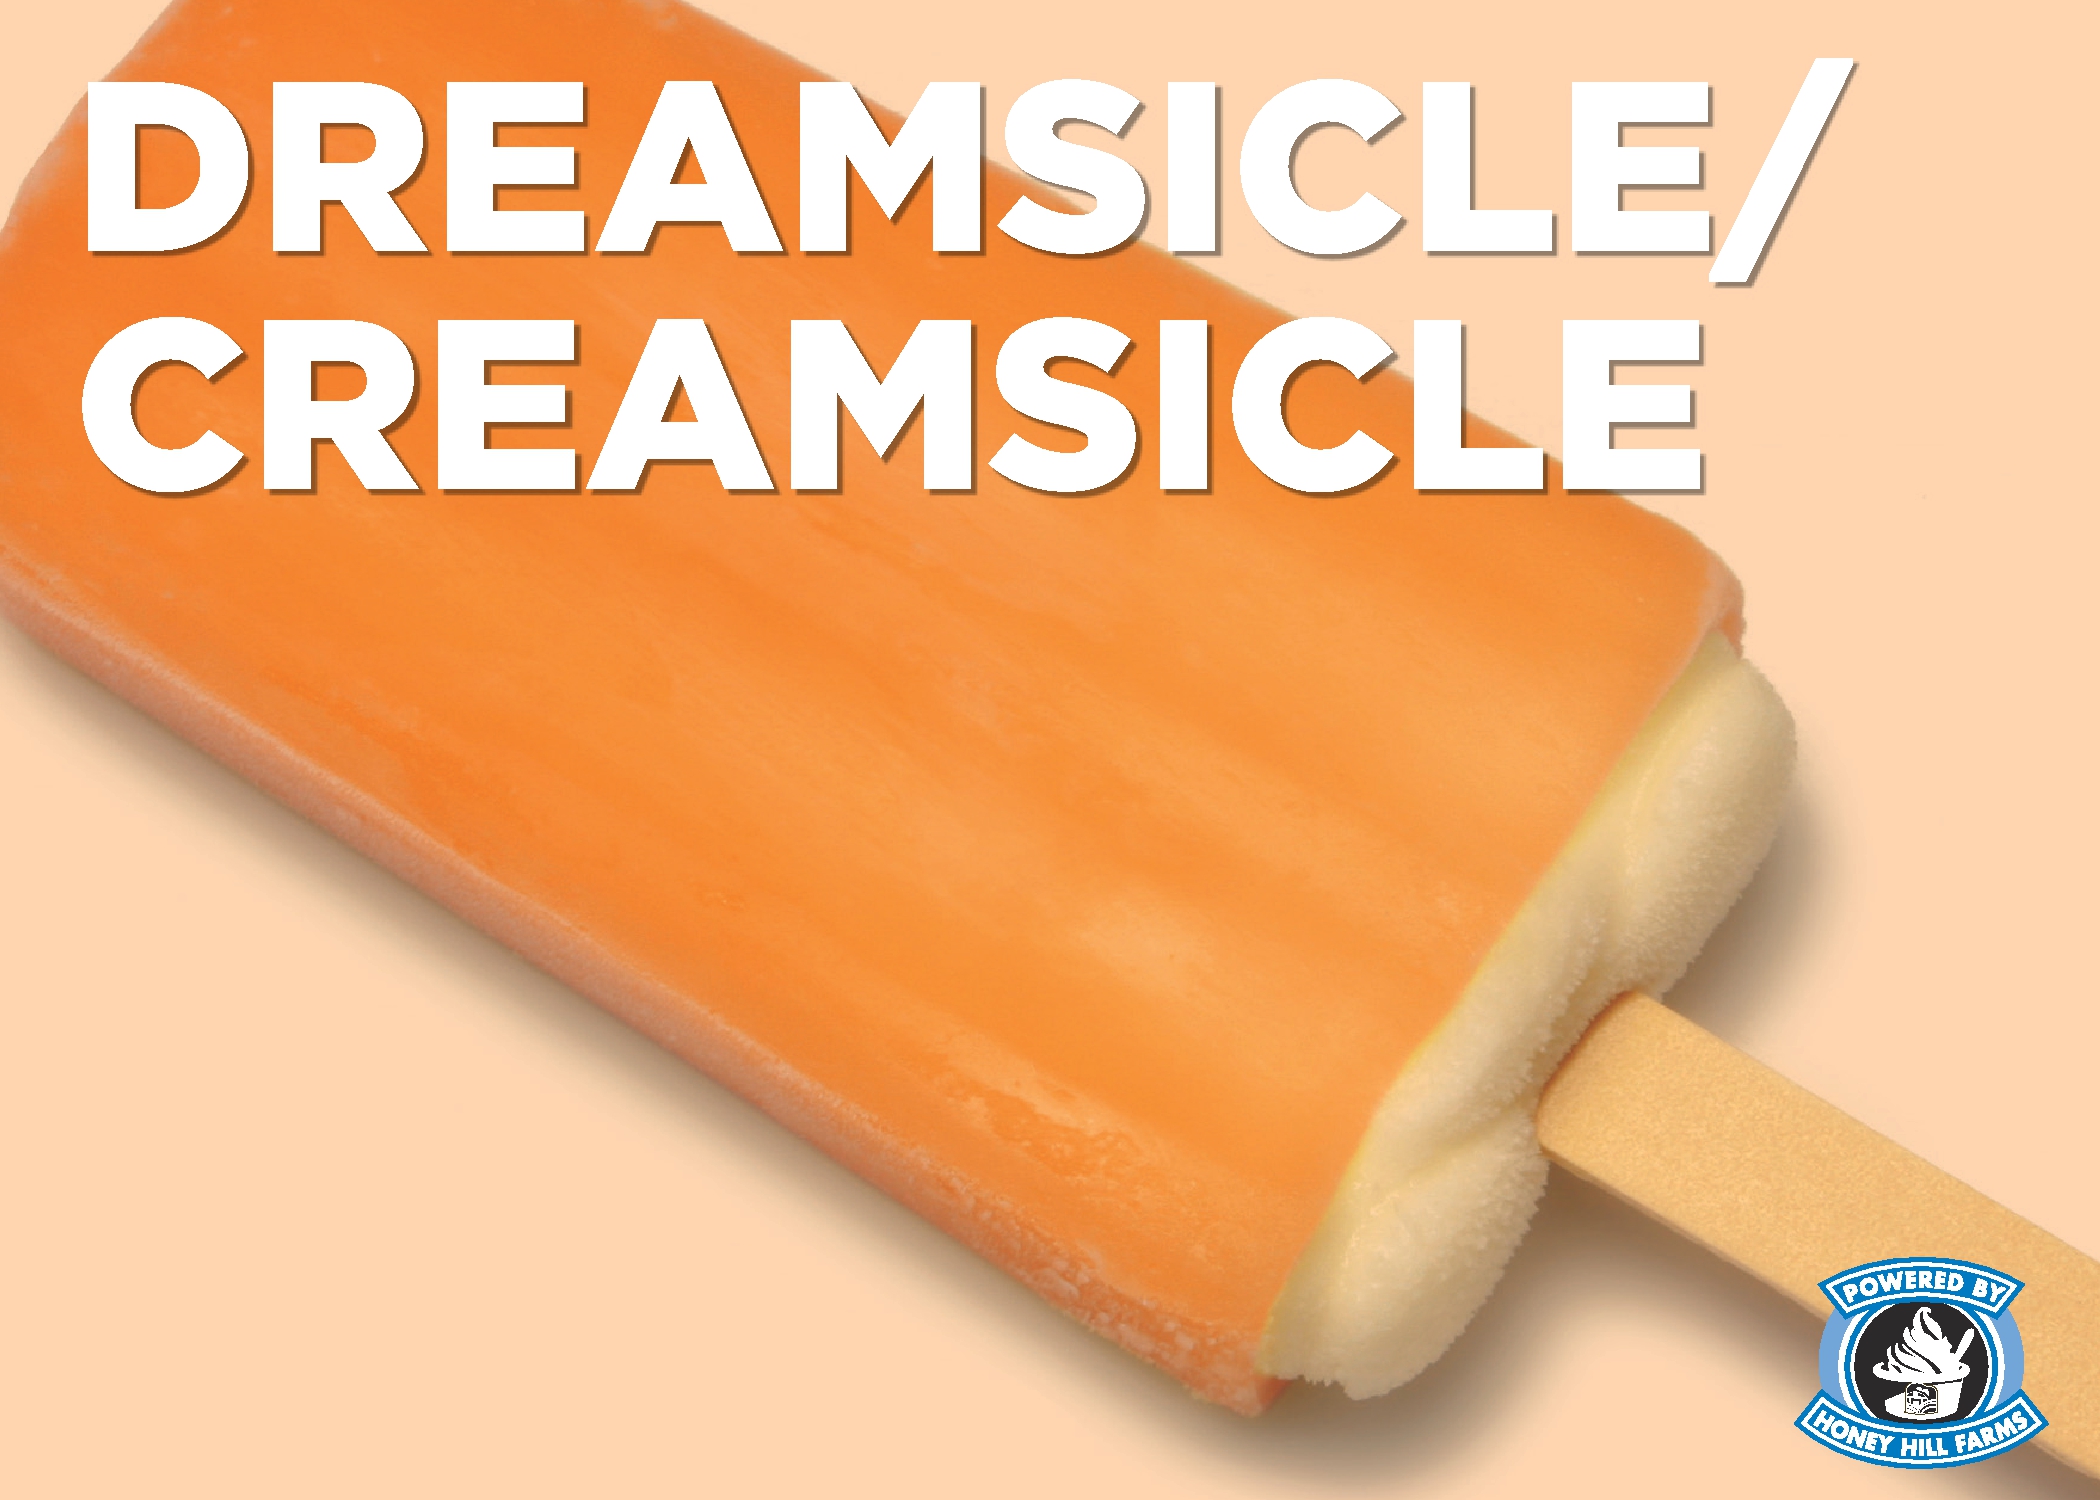 Dreamsicle Creamsicle